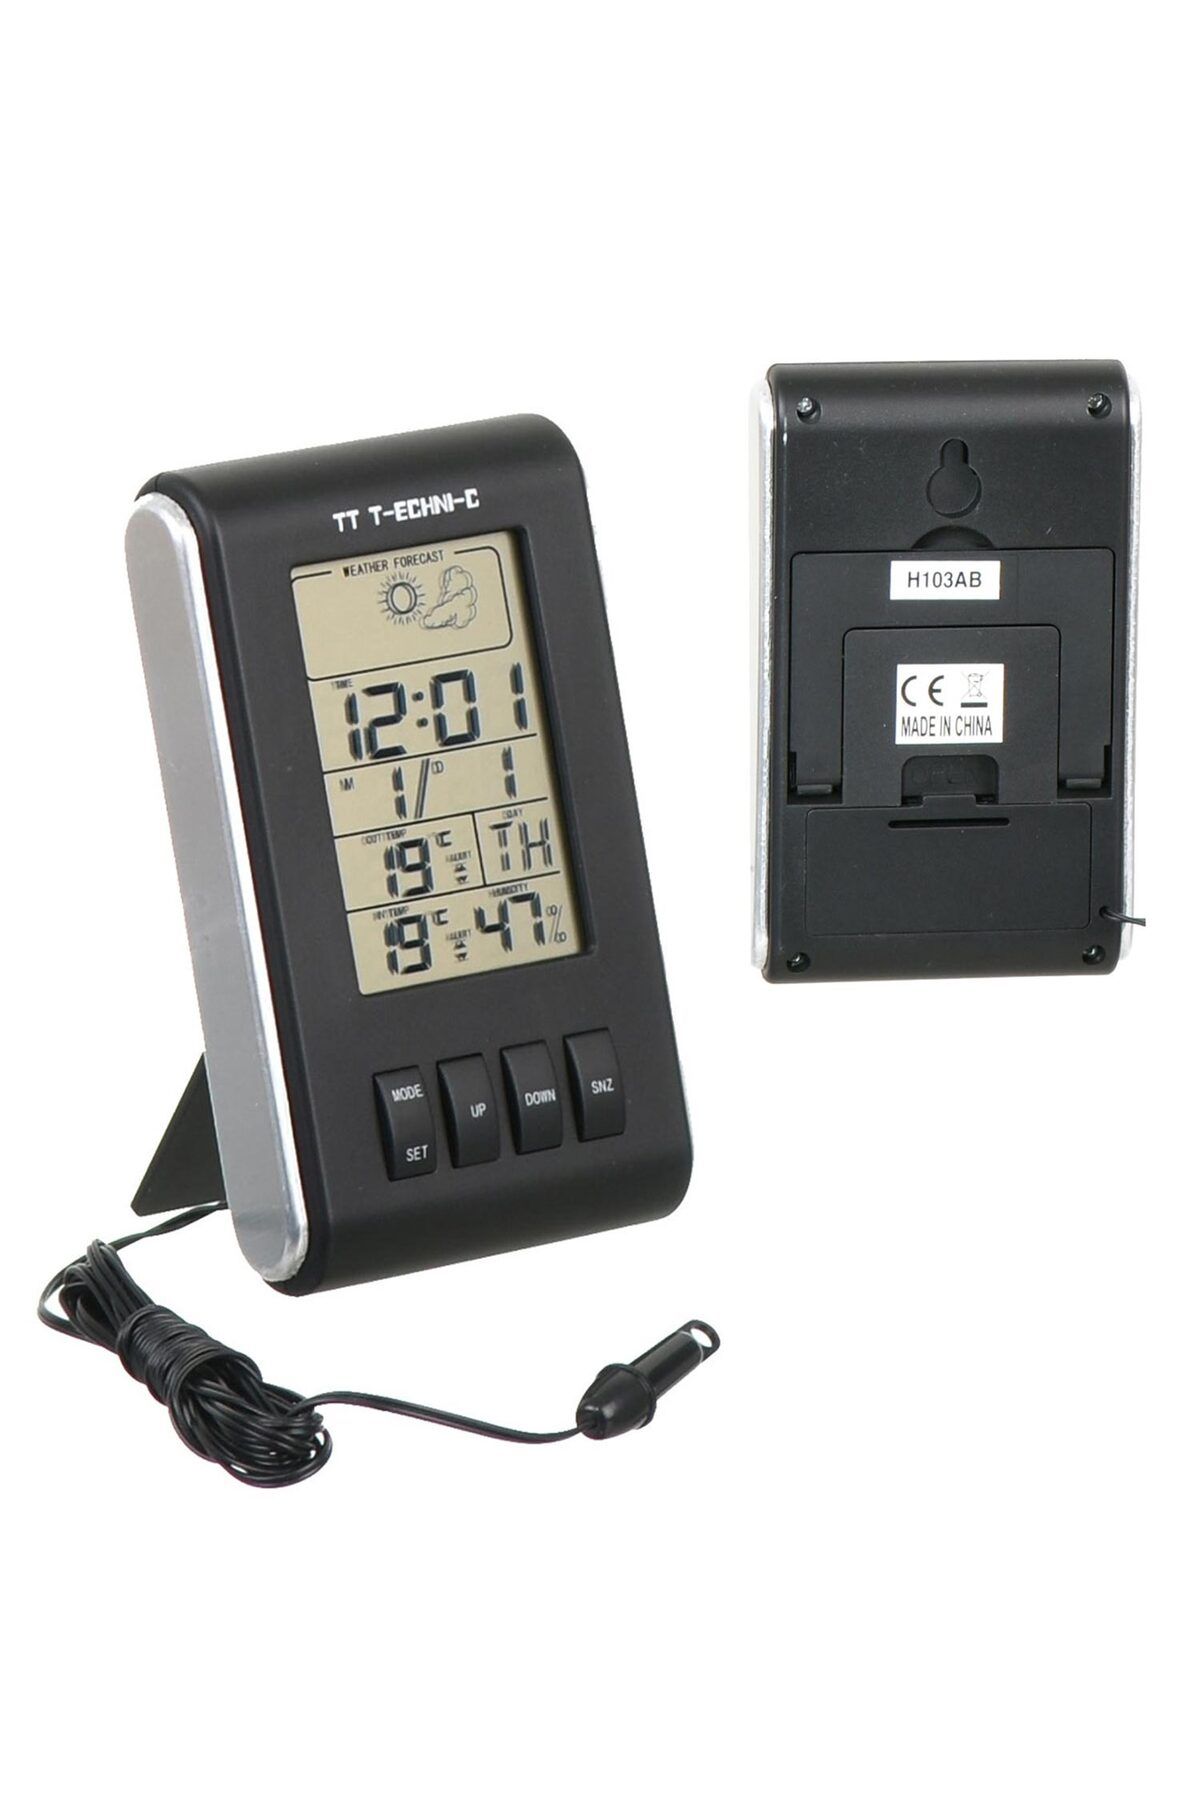 Mulvix Mlvx Termometre Dijital Nem Ölçer Saat Alarm Iç Diş Ortam  H-103Ab Mlv  Blsm